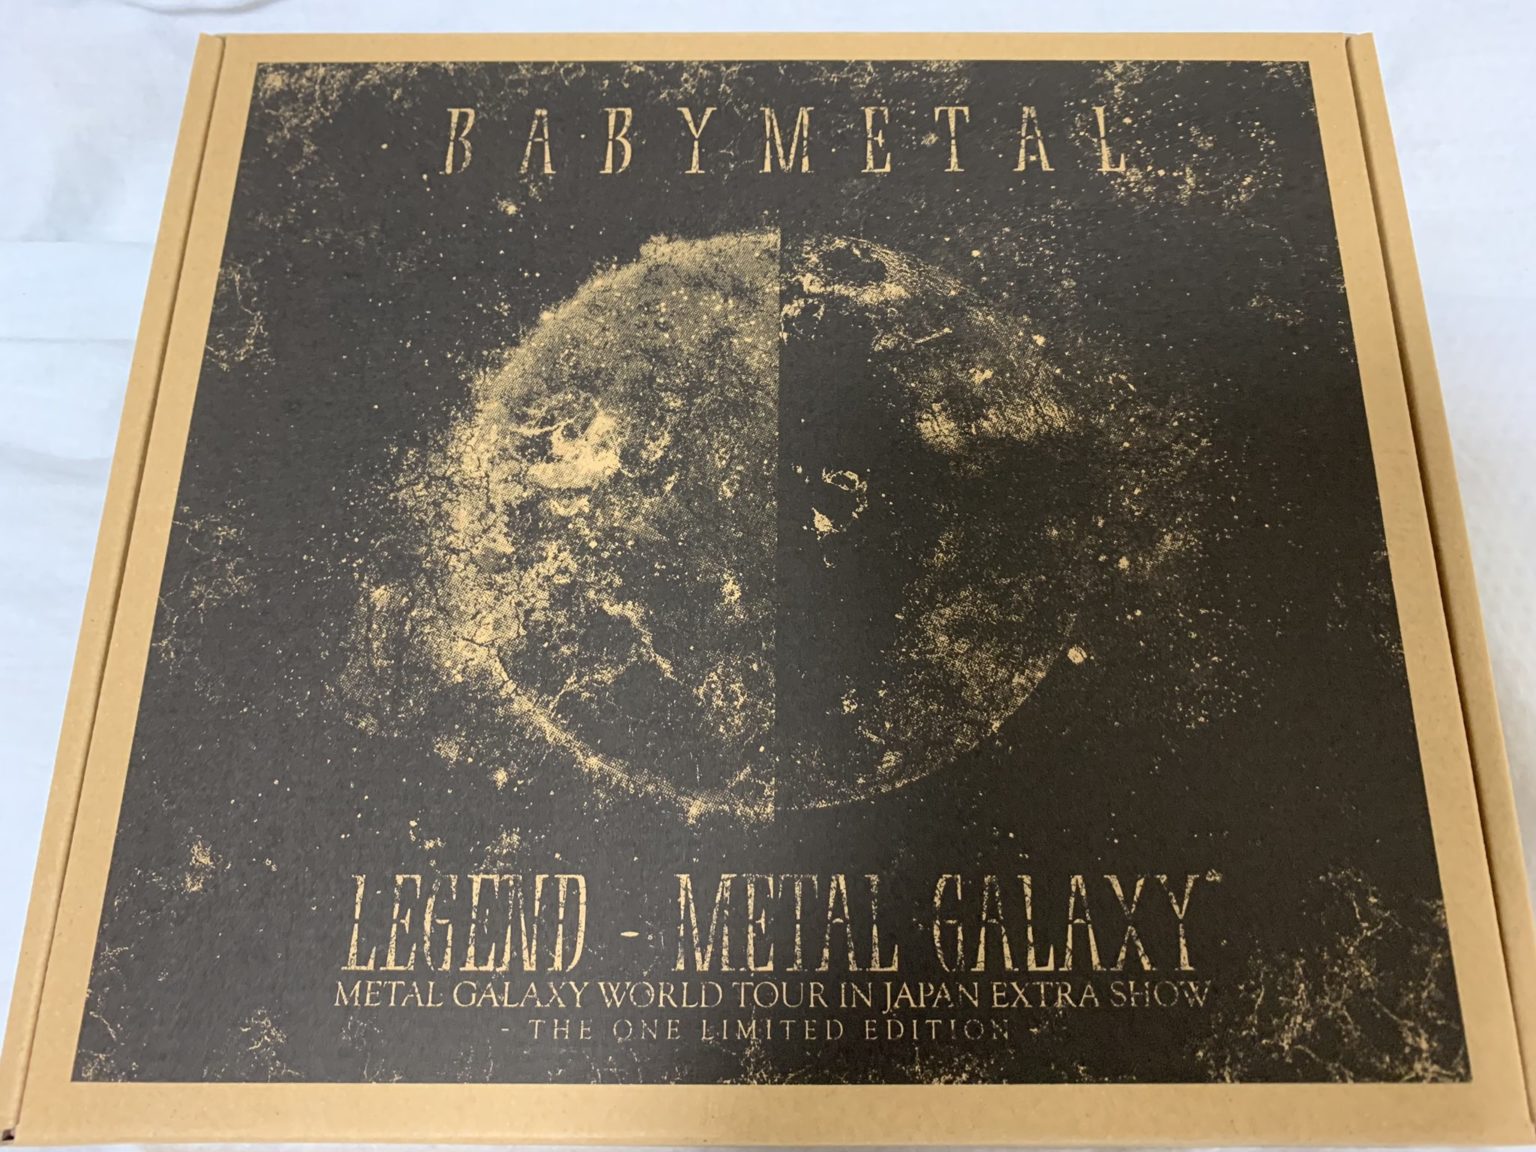 LEGEND – METAL GALAXY Has Released!